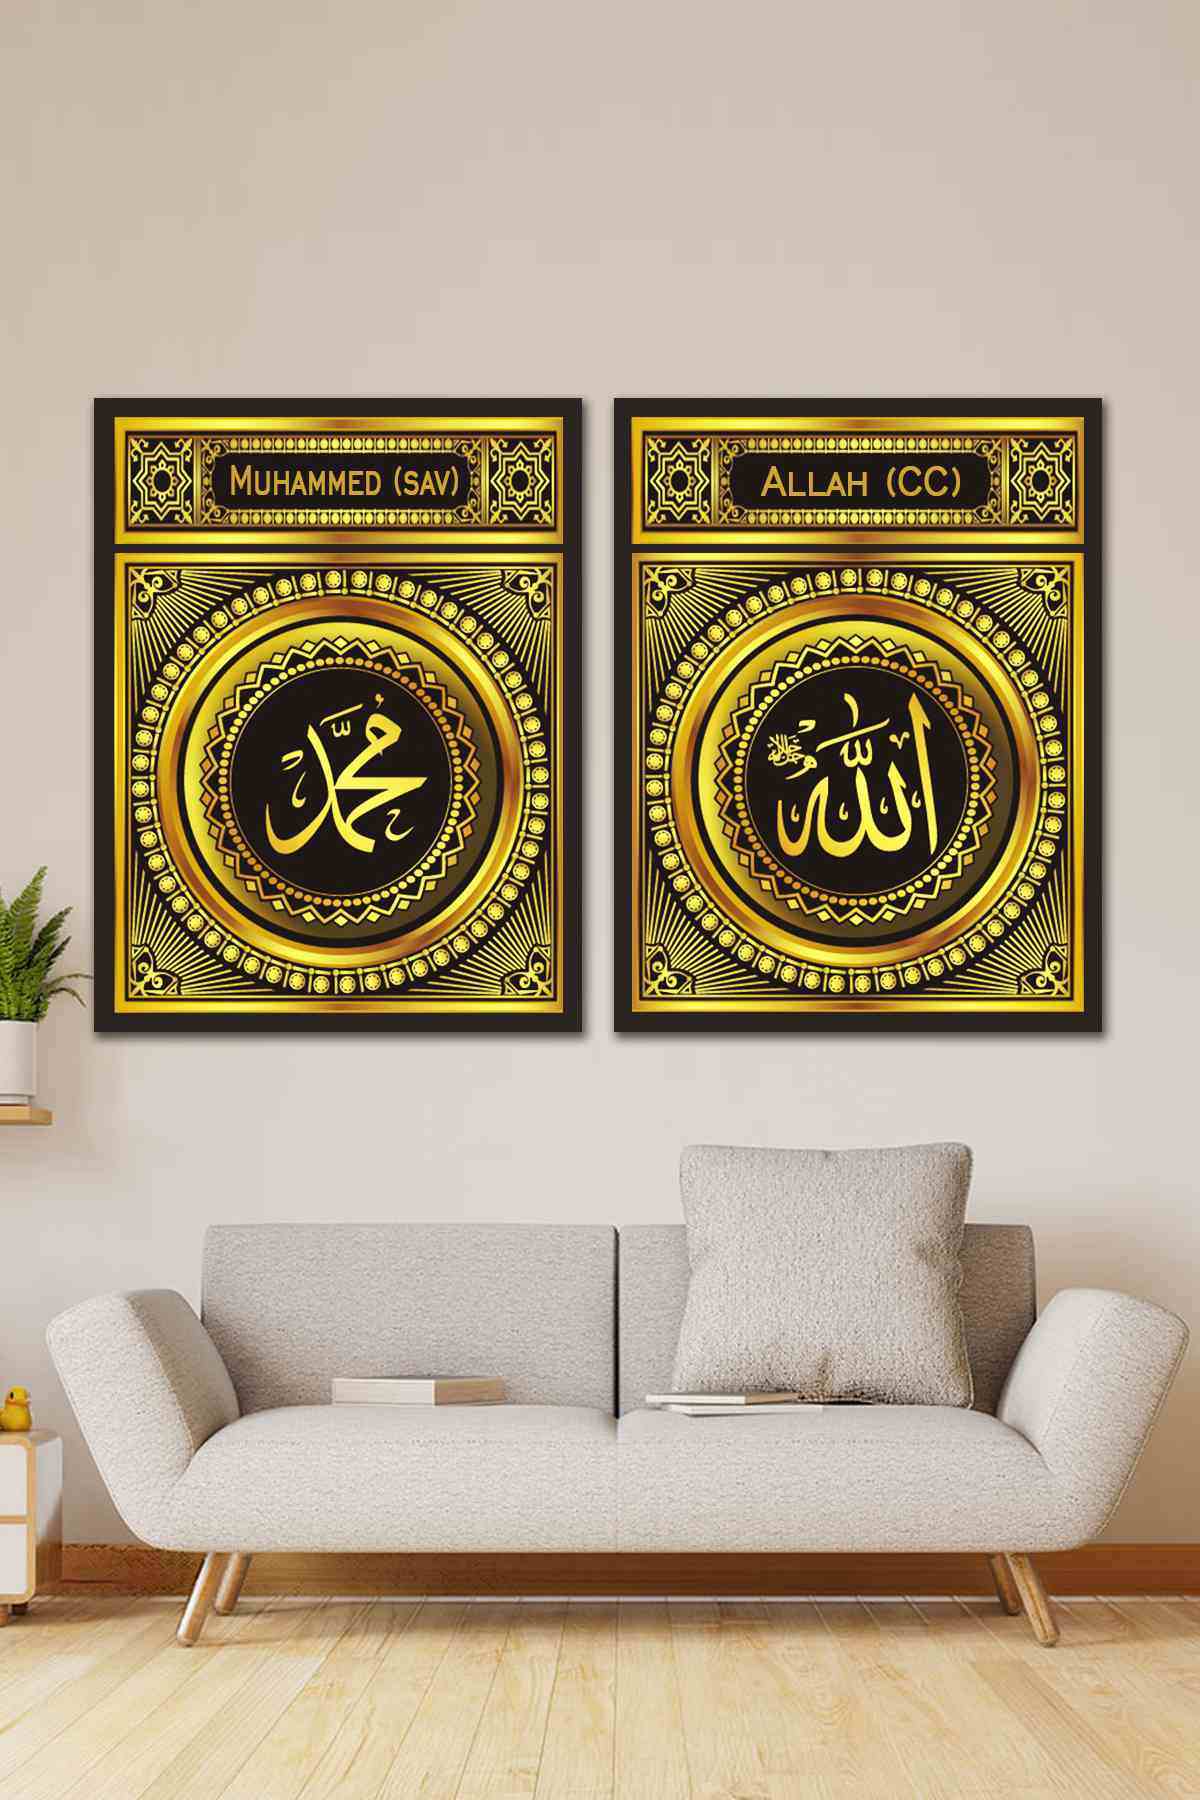 CLZ104 Allah (c.c.)   Muhammed (s.a.v) ( Hediyelik)  (70 x 50) cm